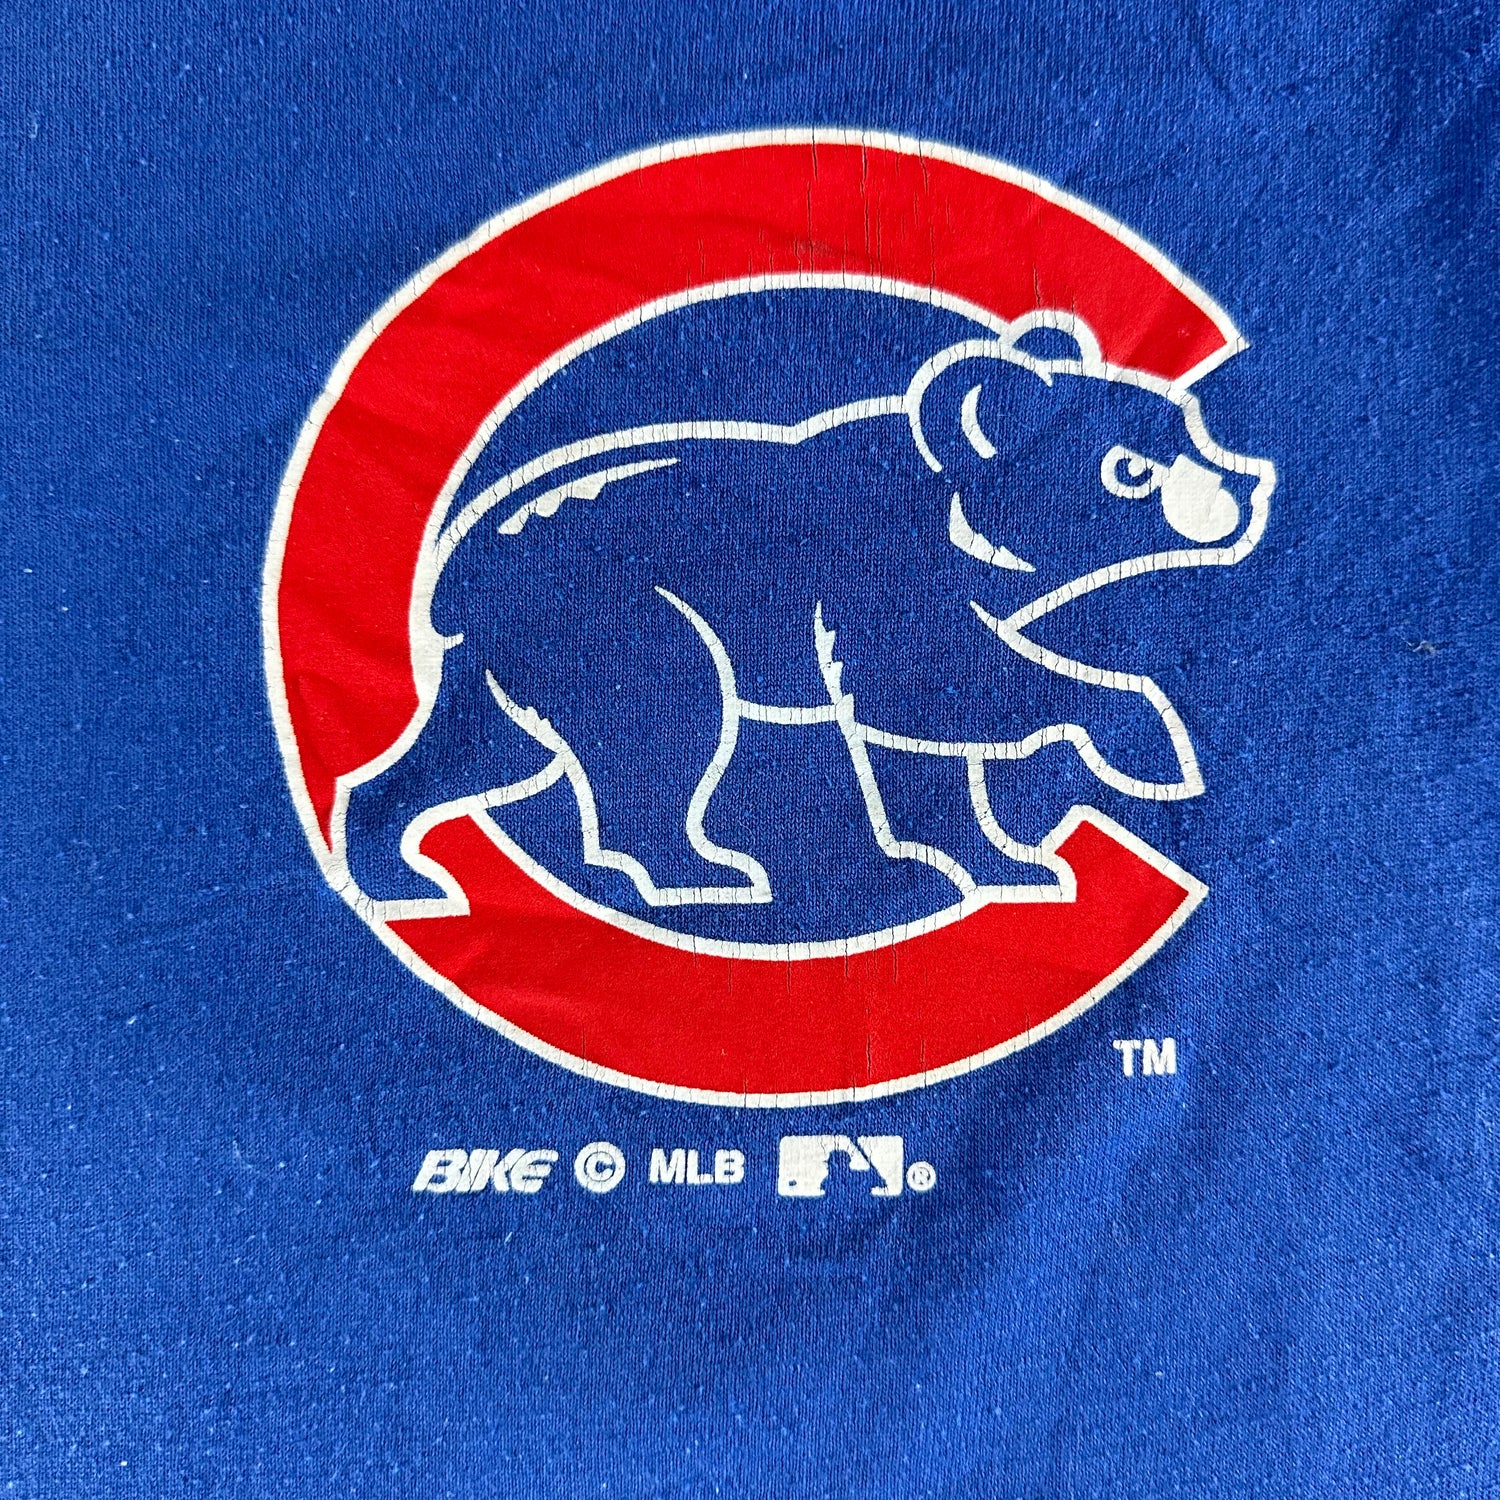 Vintage 1980s Chicago Cubs T-shirt size Medium